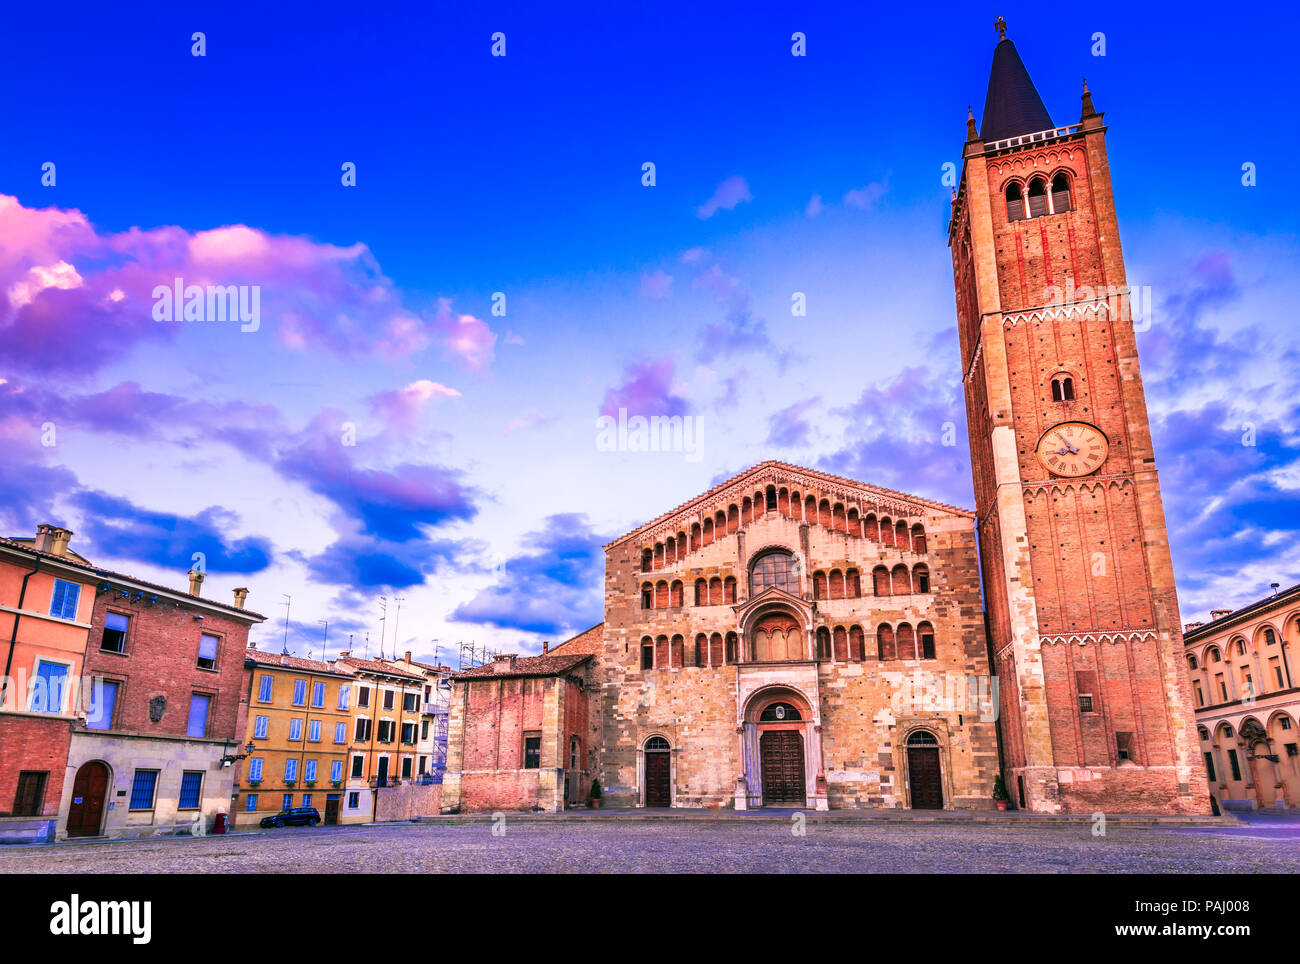 Parma, Italien - Piazza del Duomo, romanischer Architektur in der Emilia-Romagna. Stockfoto